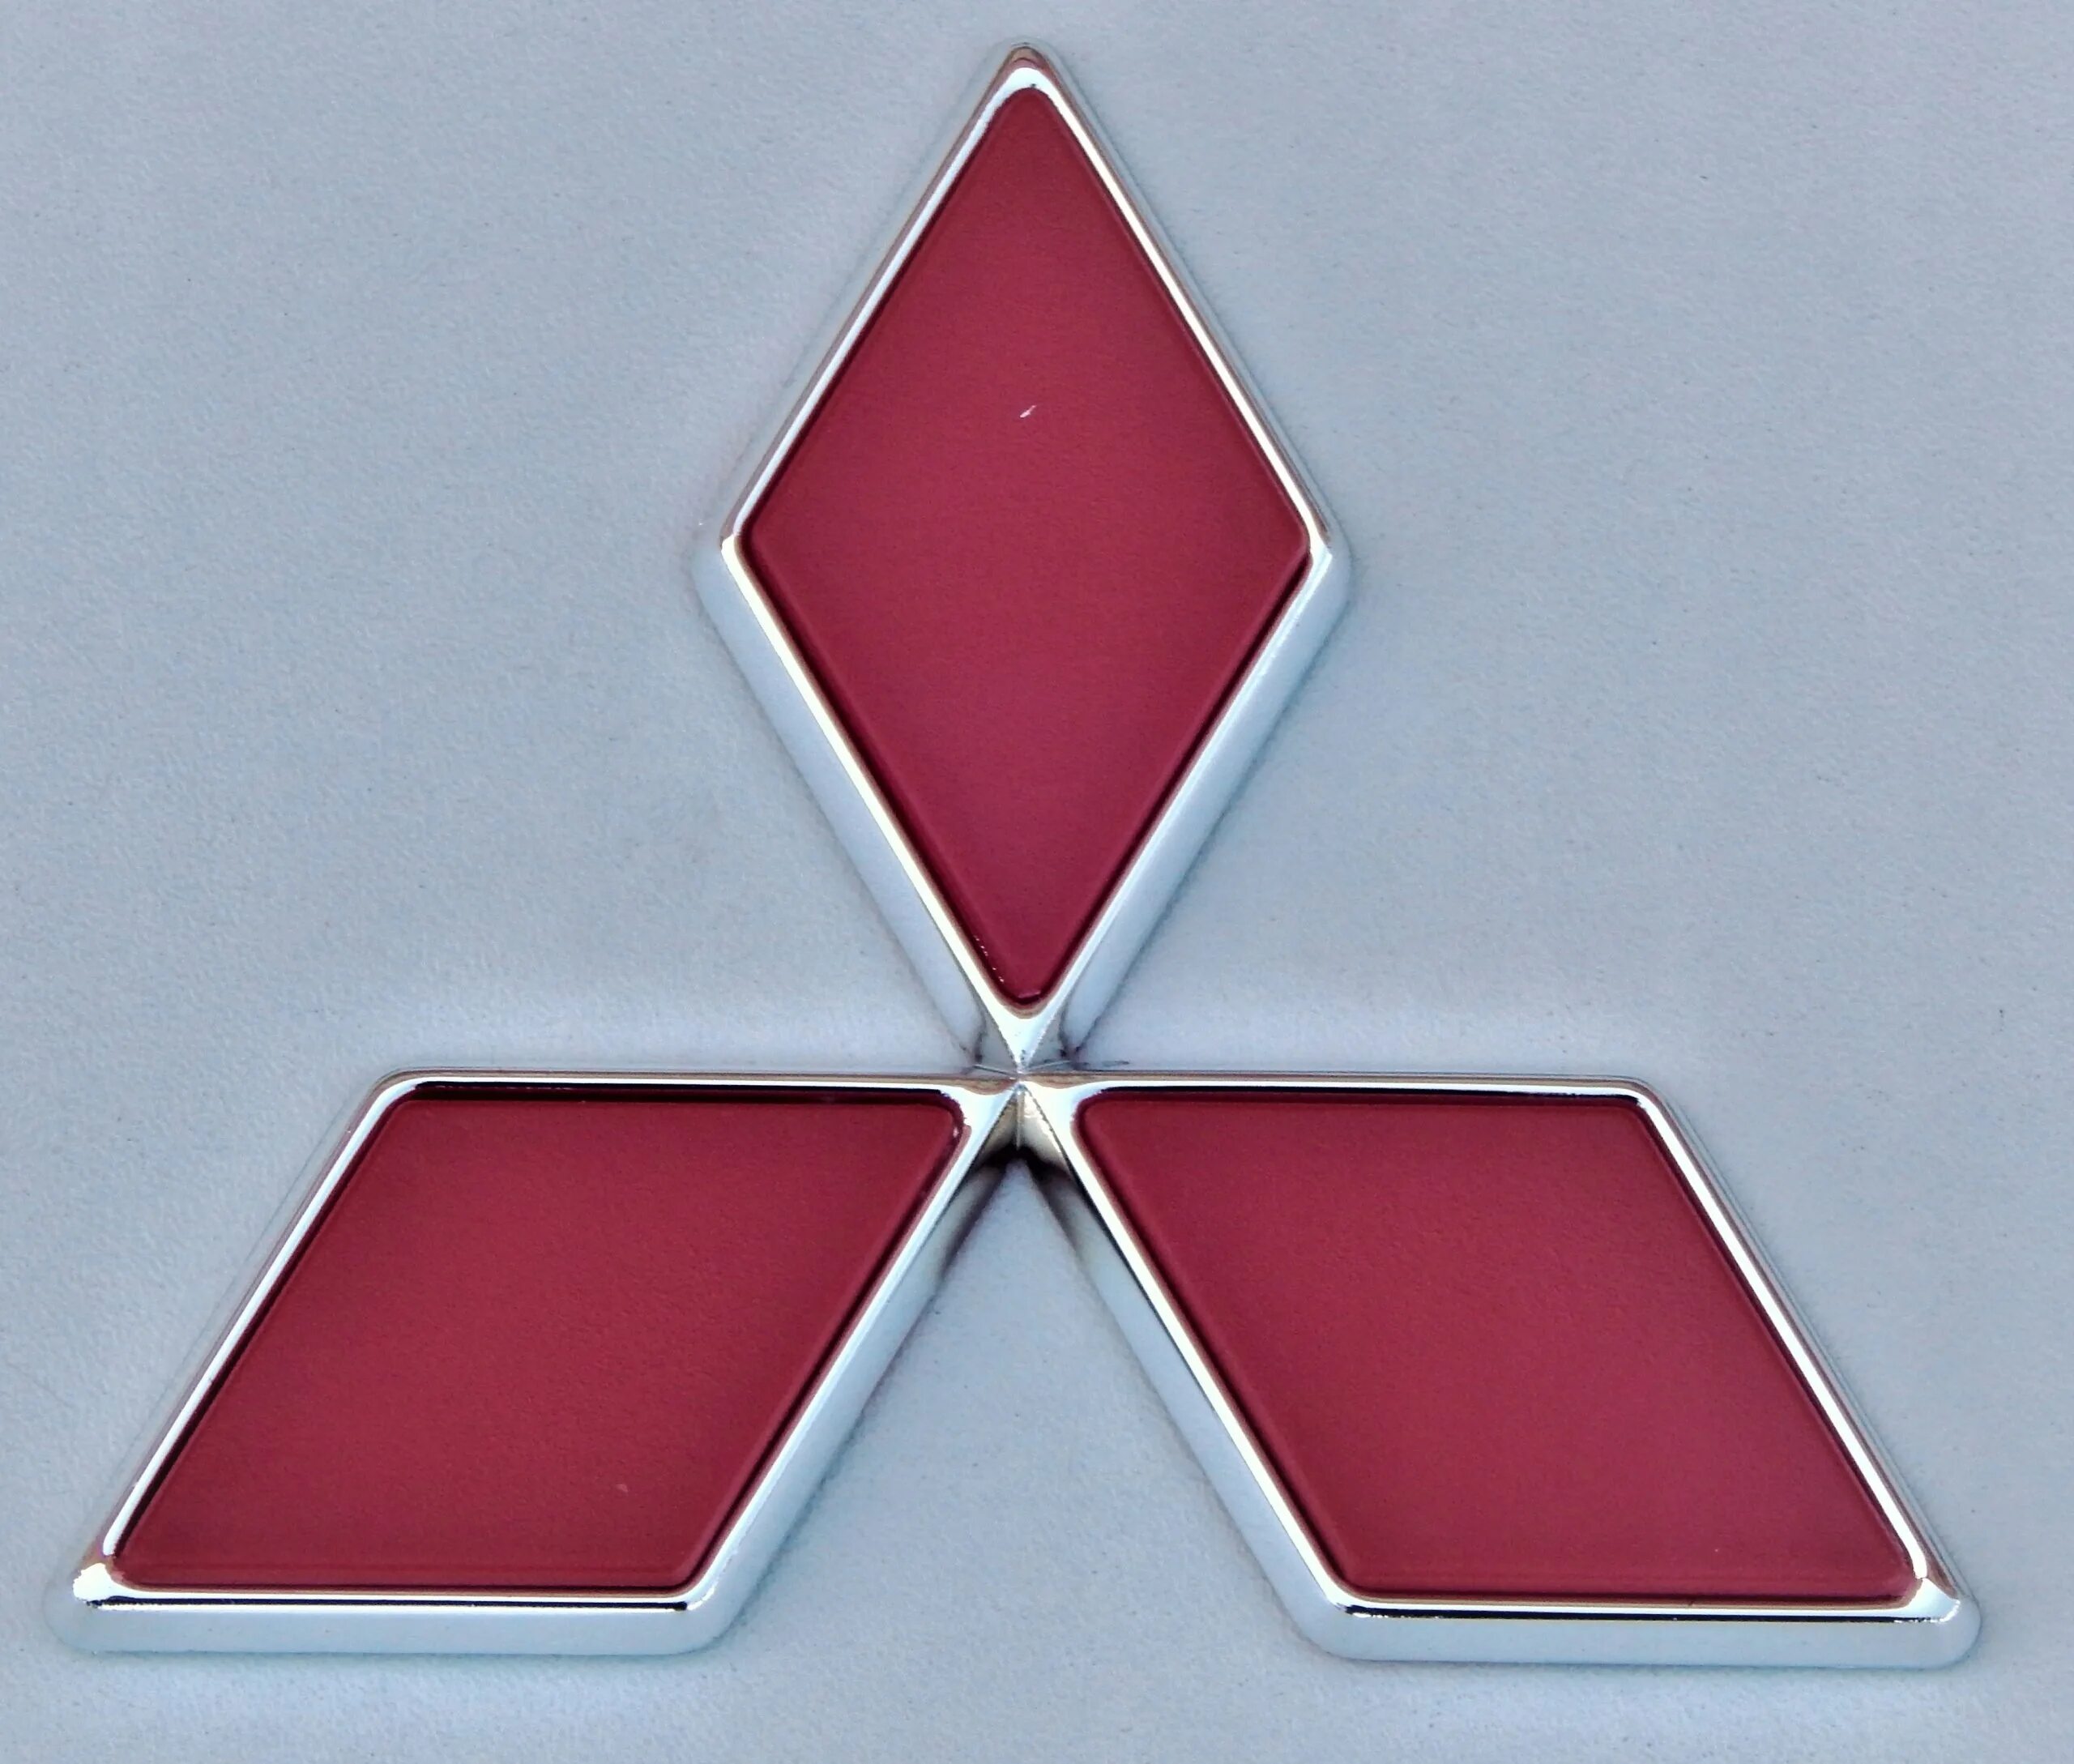 Логотип mitsubishi. Значок машины Мицубиси. Mitsubishi Emblem. Мицубиси Паджеро значок. Мицубиши или Мицубиси значок.